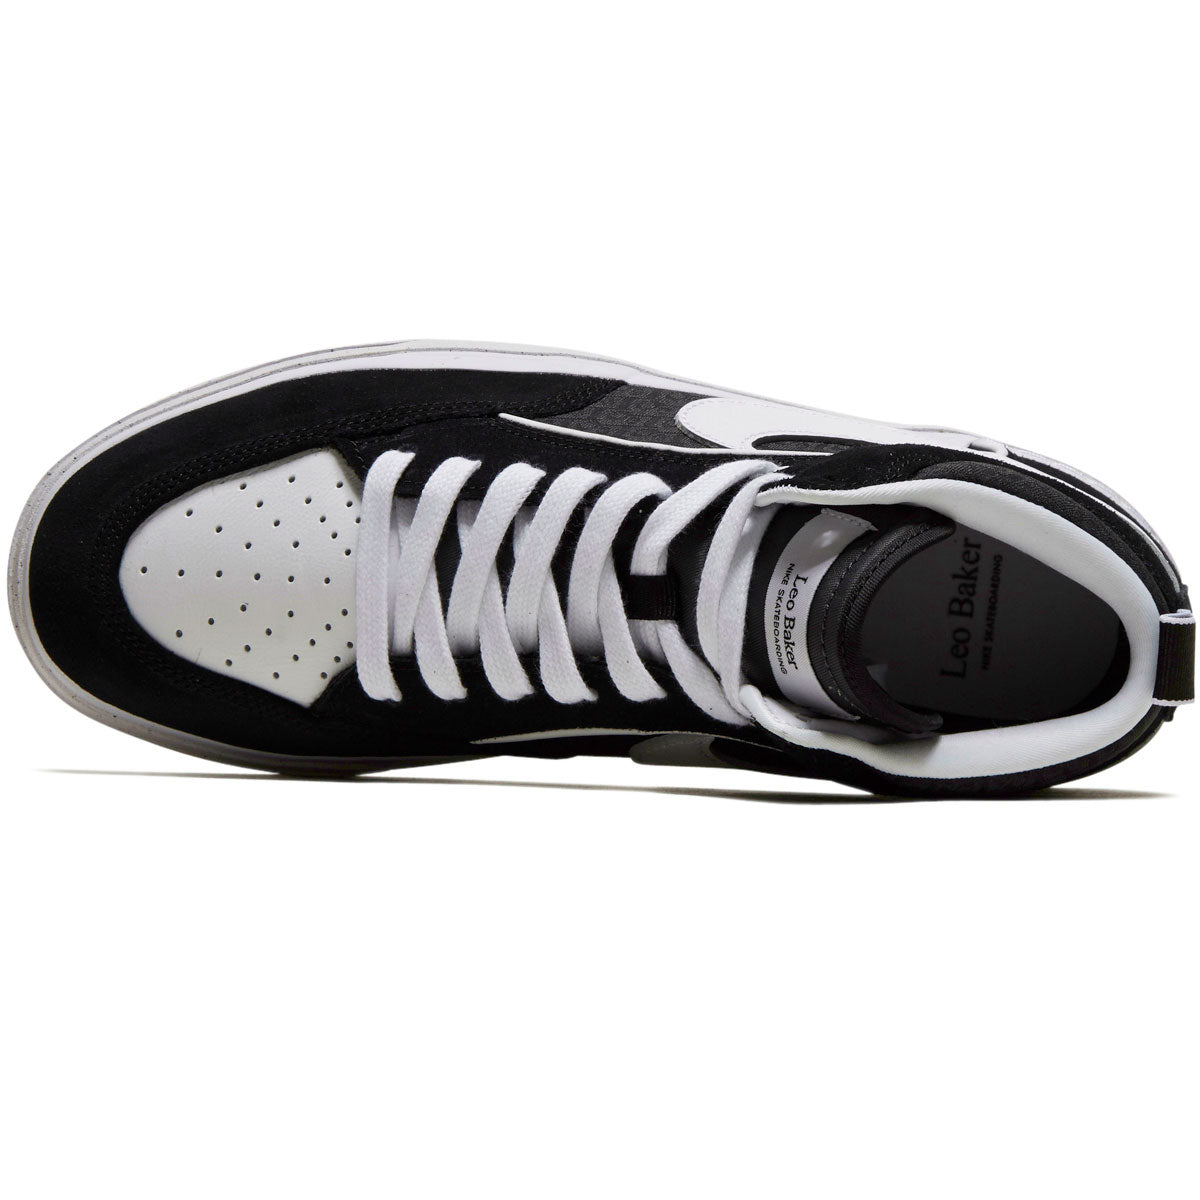 Nike SB React Leo Shoes - Black/White/Black/Gum Light Brown image 3